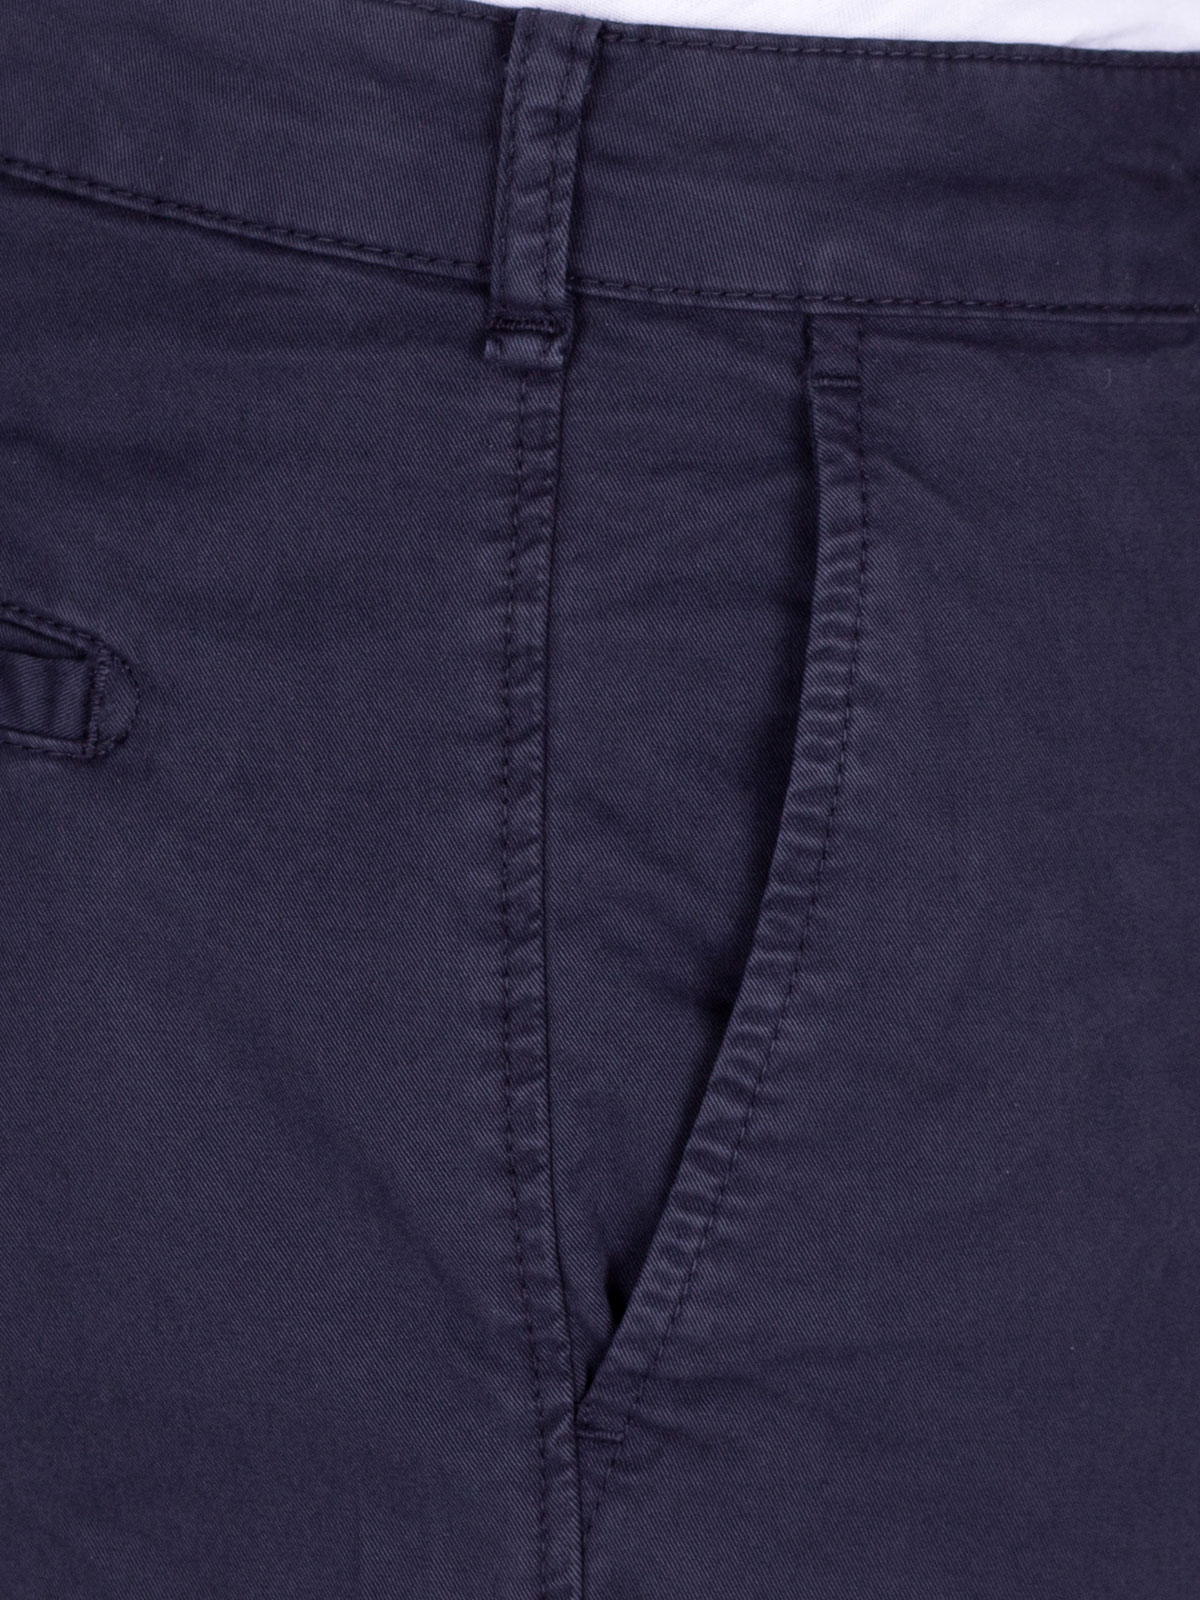 Pantaloni bleumarin cu silueta mulată - 60277 € 49.49 img2